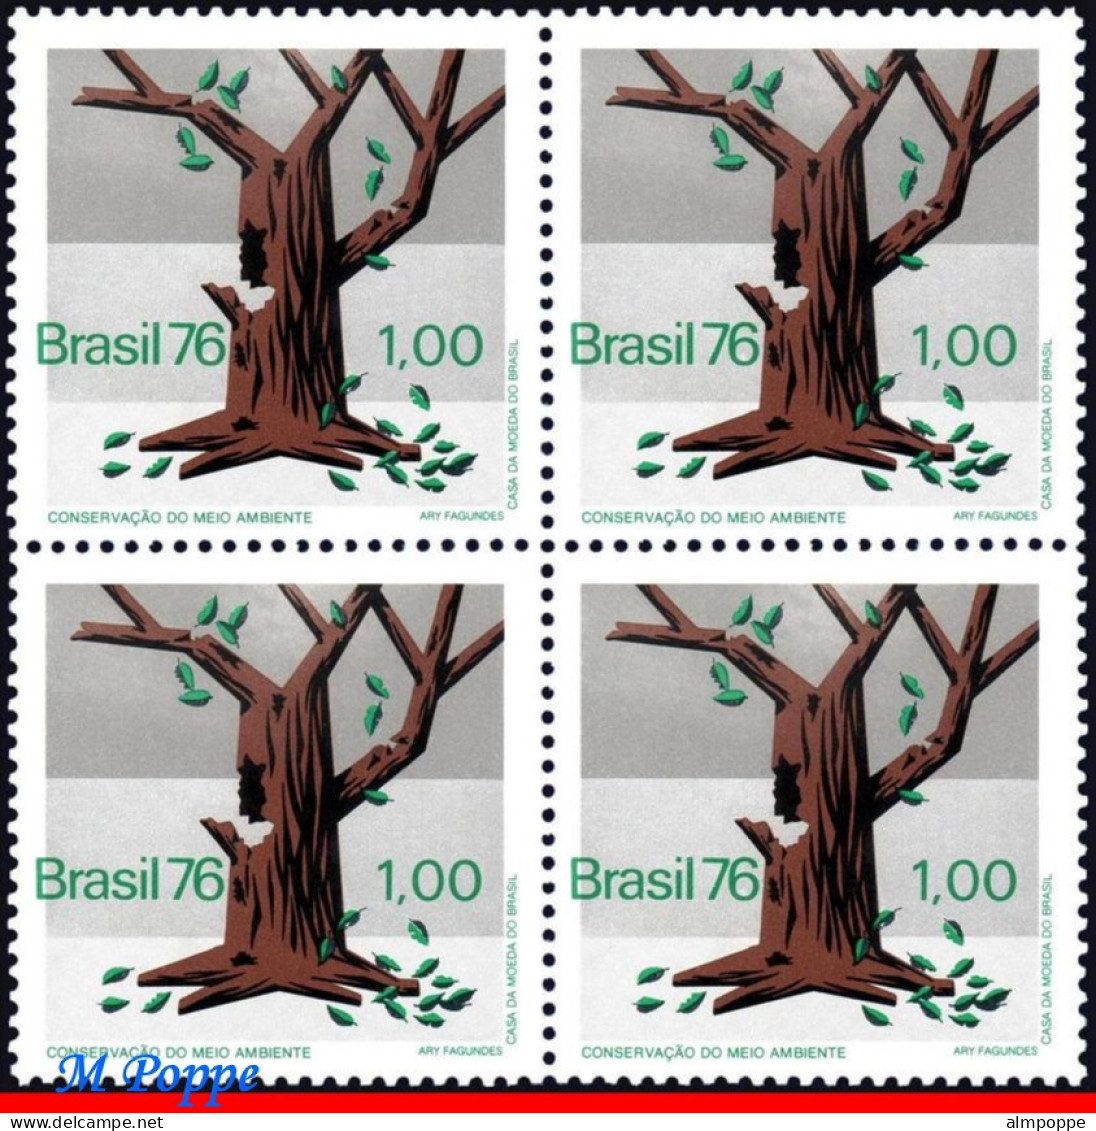 Ref. BR-1474-Q BRAZIL 1976 - PROTECTION OF ENVIRONMENT, DYING TREE, MI# 1559, BLOCK MNH, NATURE 4V Sc# 1474 - Blocks & Sheetlets